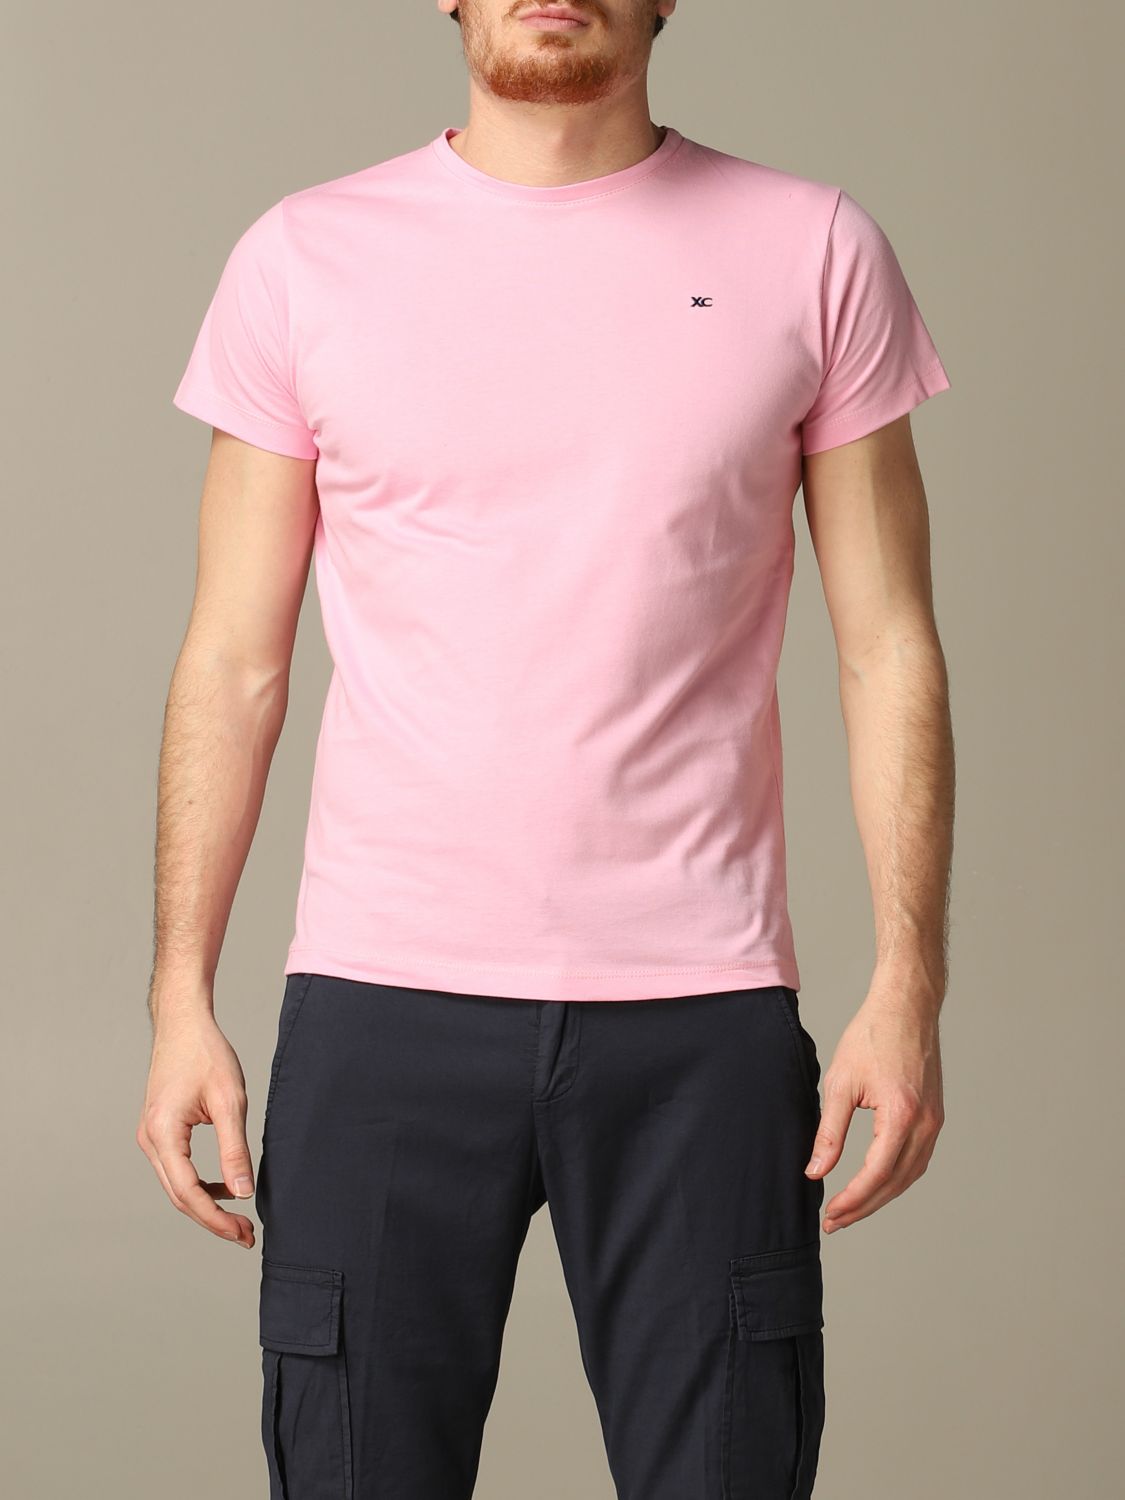 Xc T-Shirt XC Men colour Pink